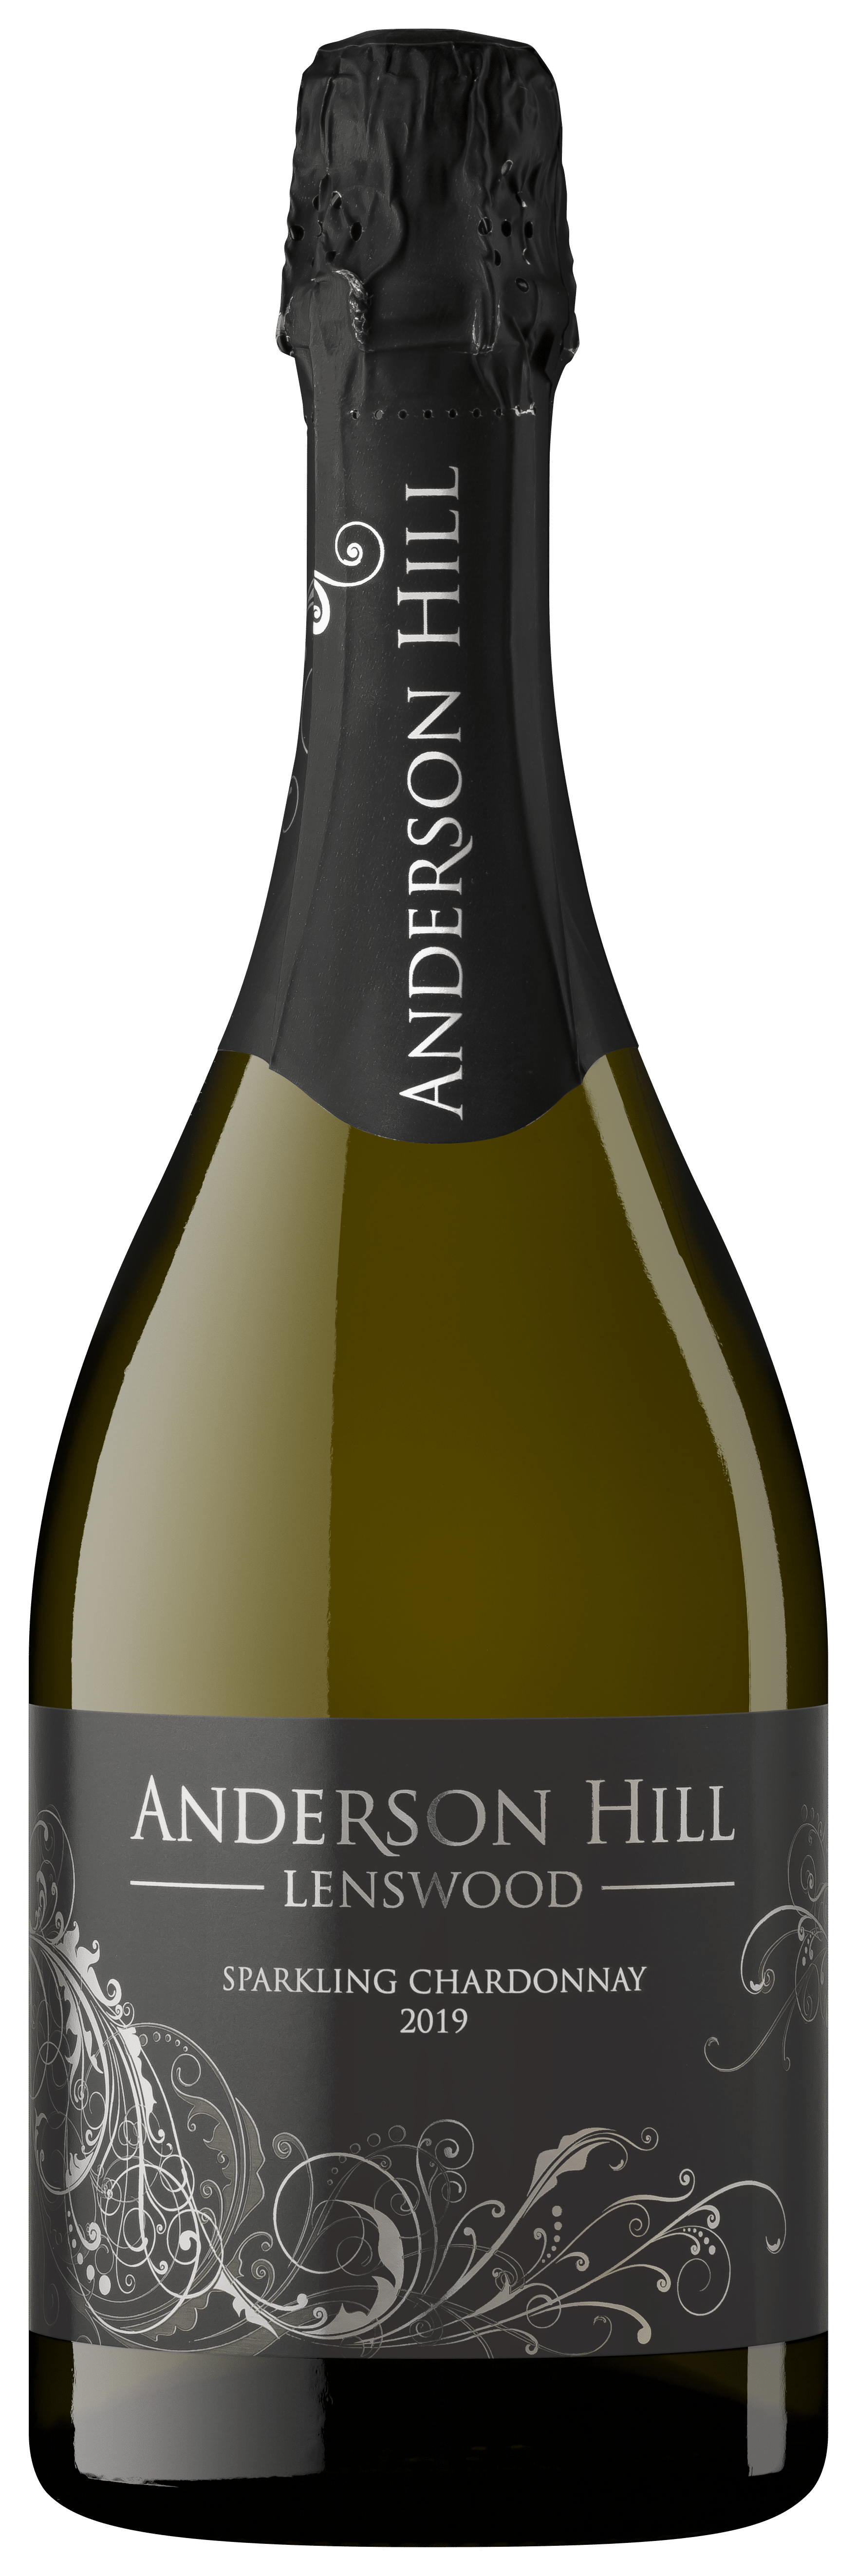 Anderson Hill Art Series Sparkling Chardonnay